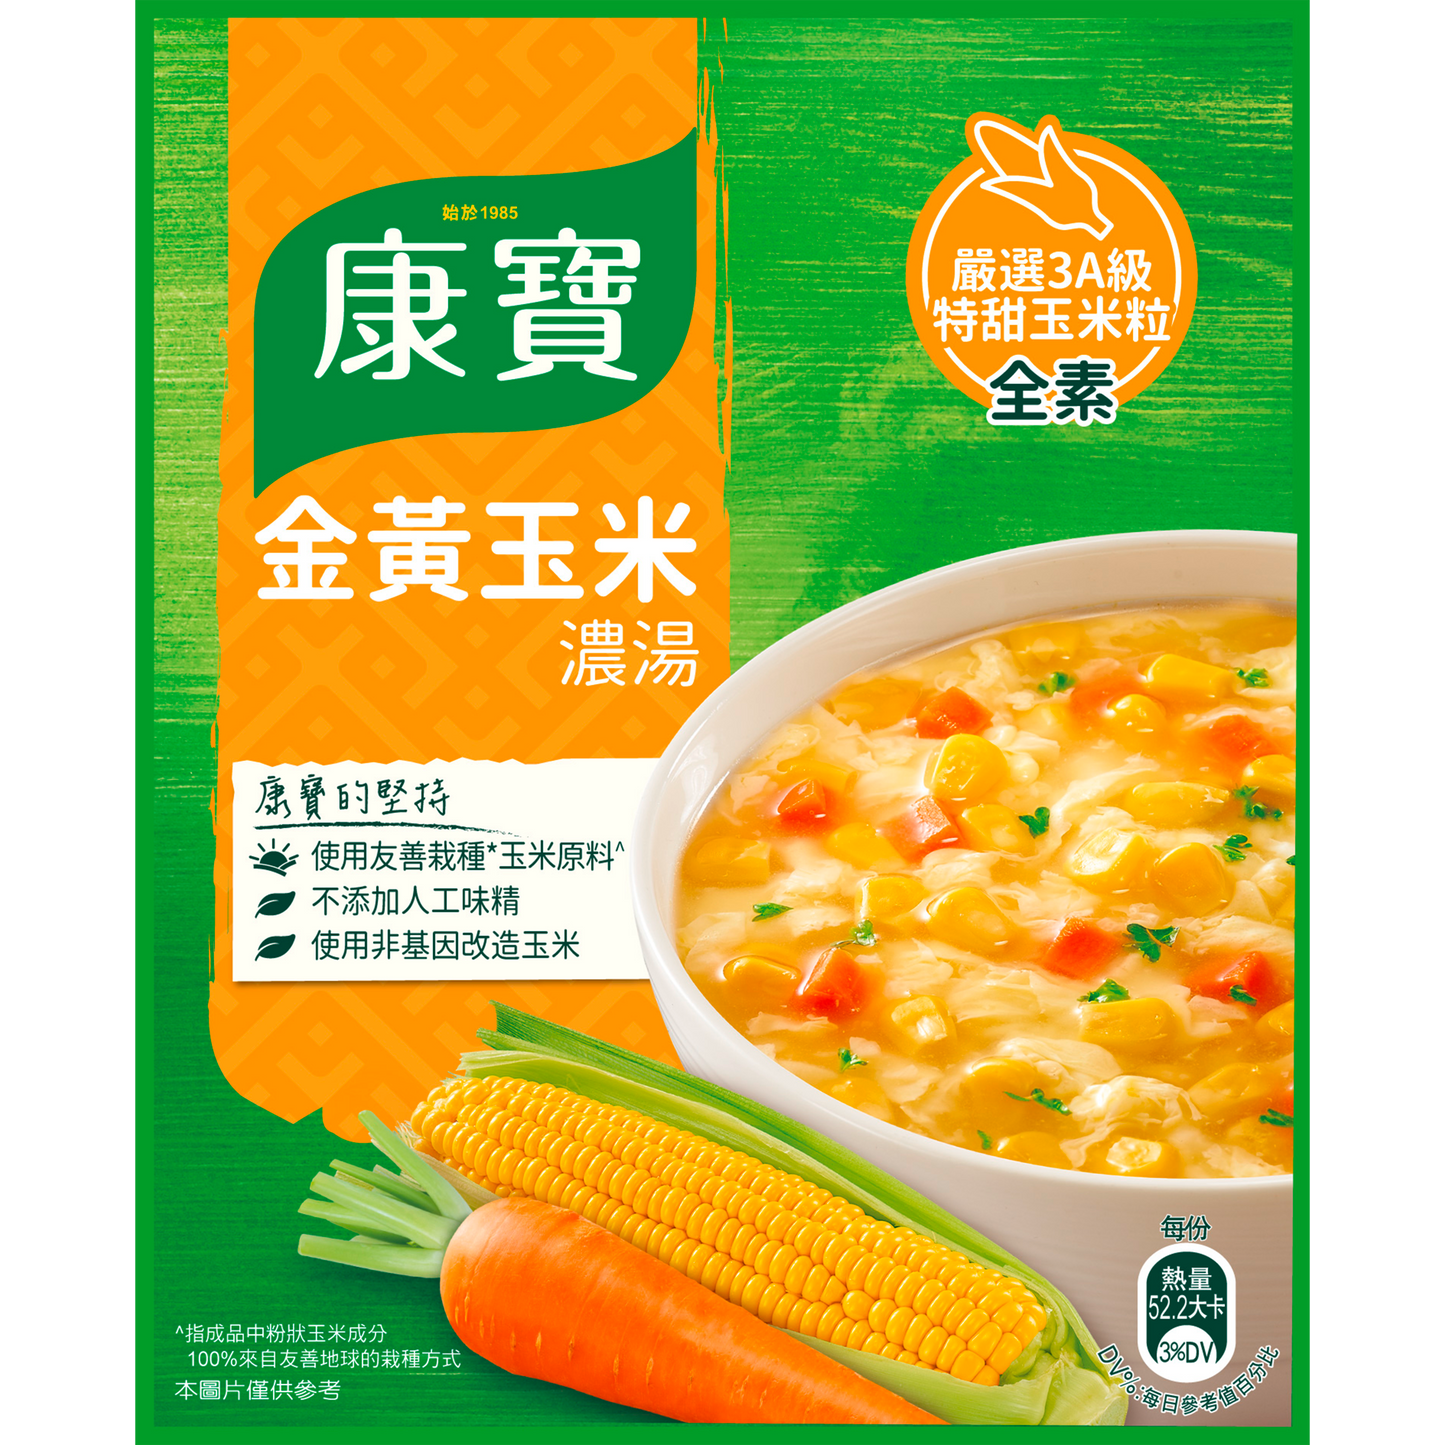 Knorr Instant Corn Soup 康寶 金黃玉米濃湯